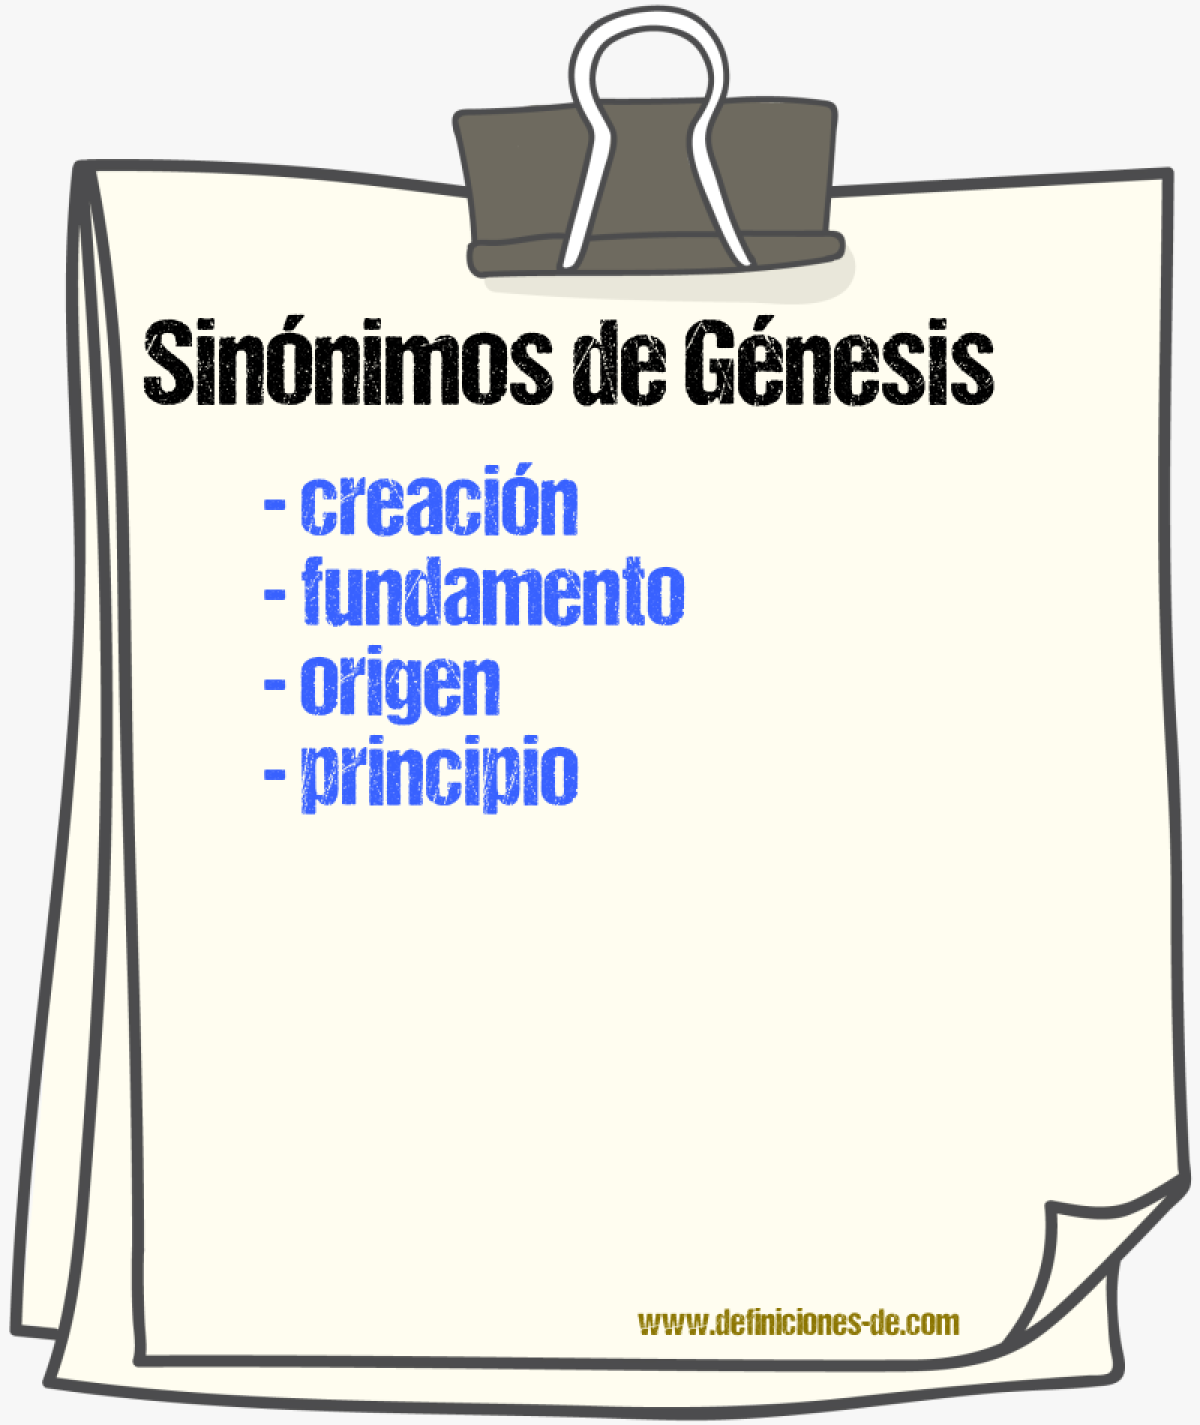 Sinónimos de génesis